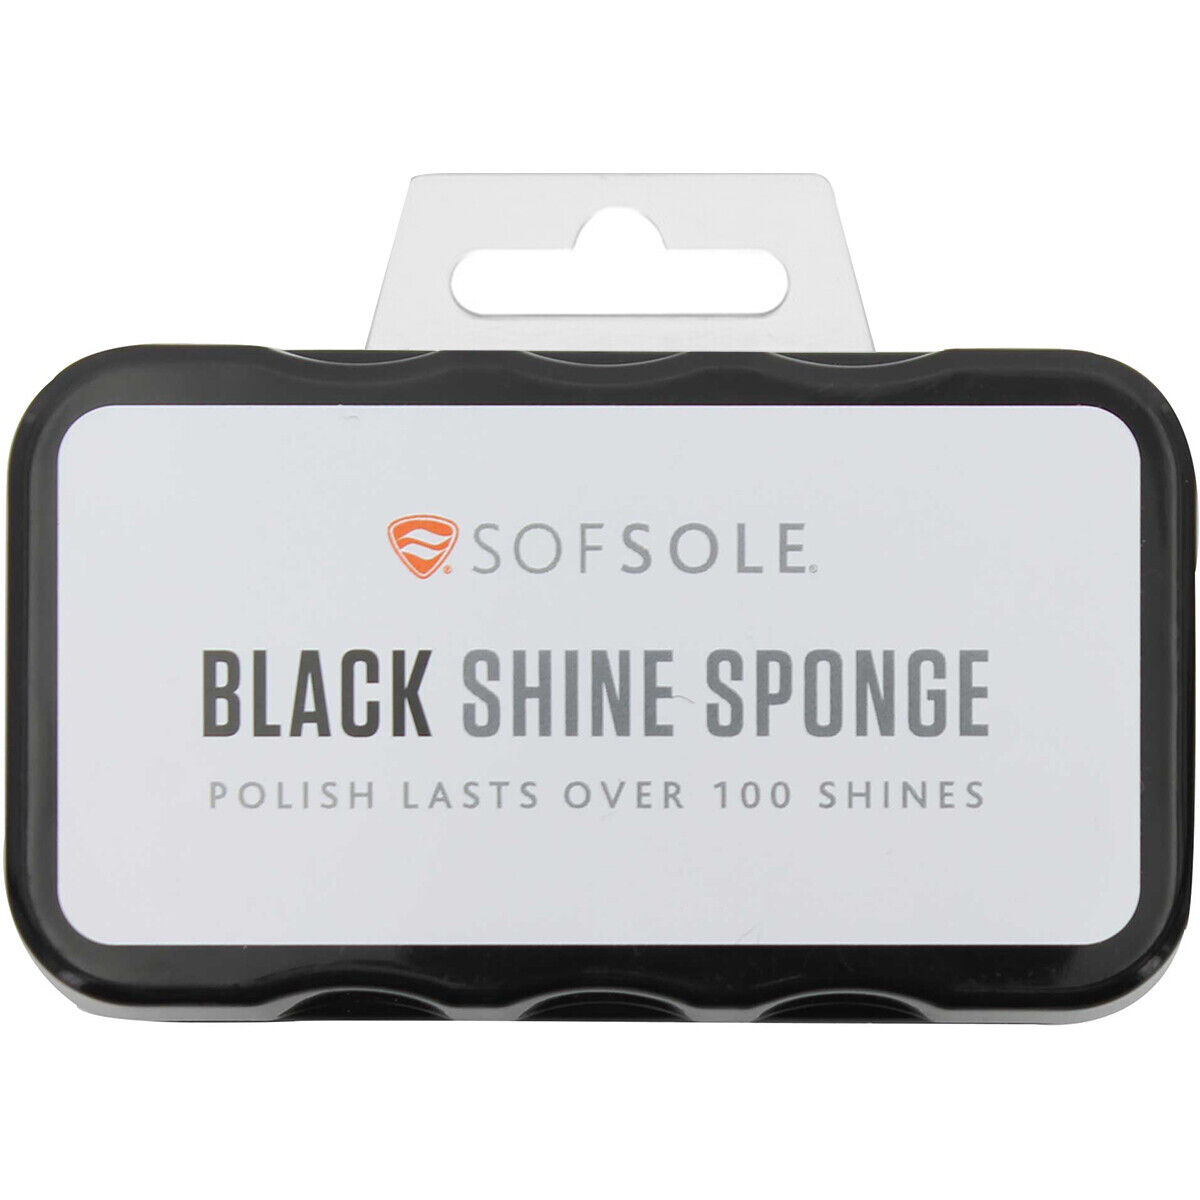 Sof Sole Black Shine Sponge for sale 